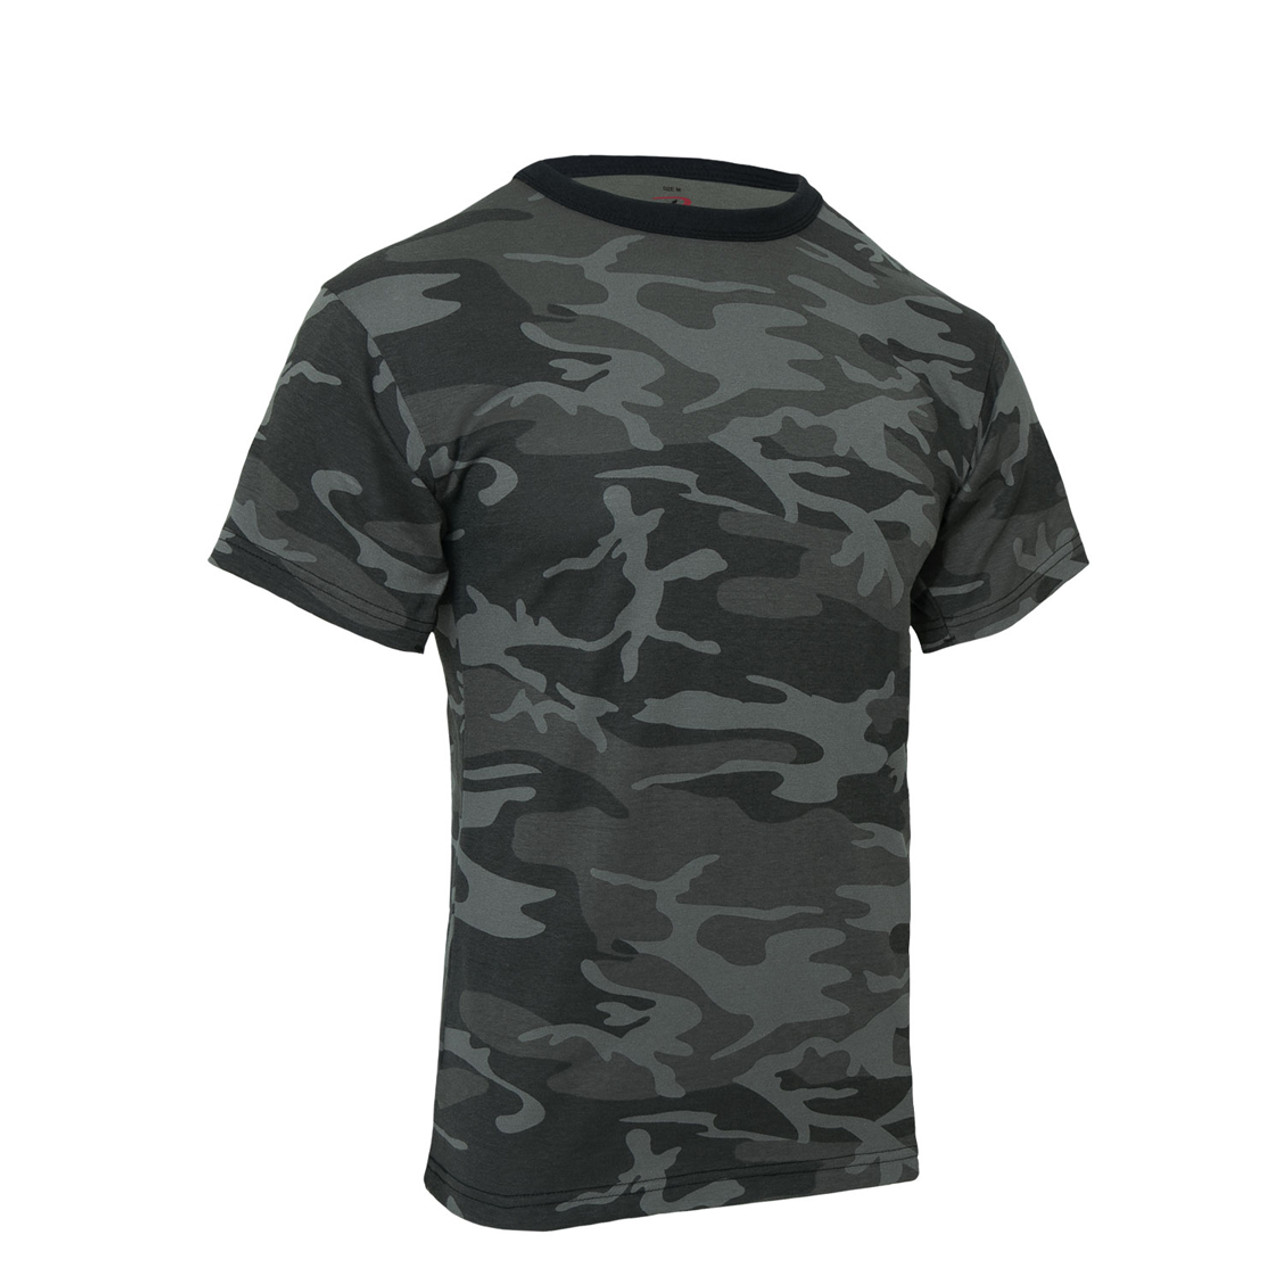 Shop Black - Shirts Army Gear Camo Navy T Fatigues